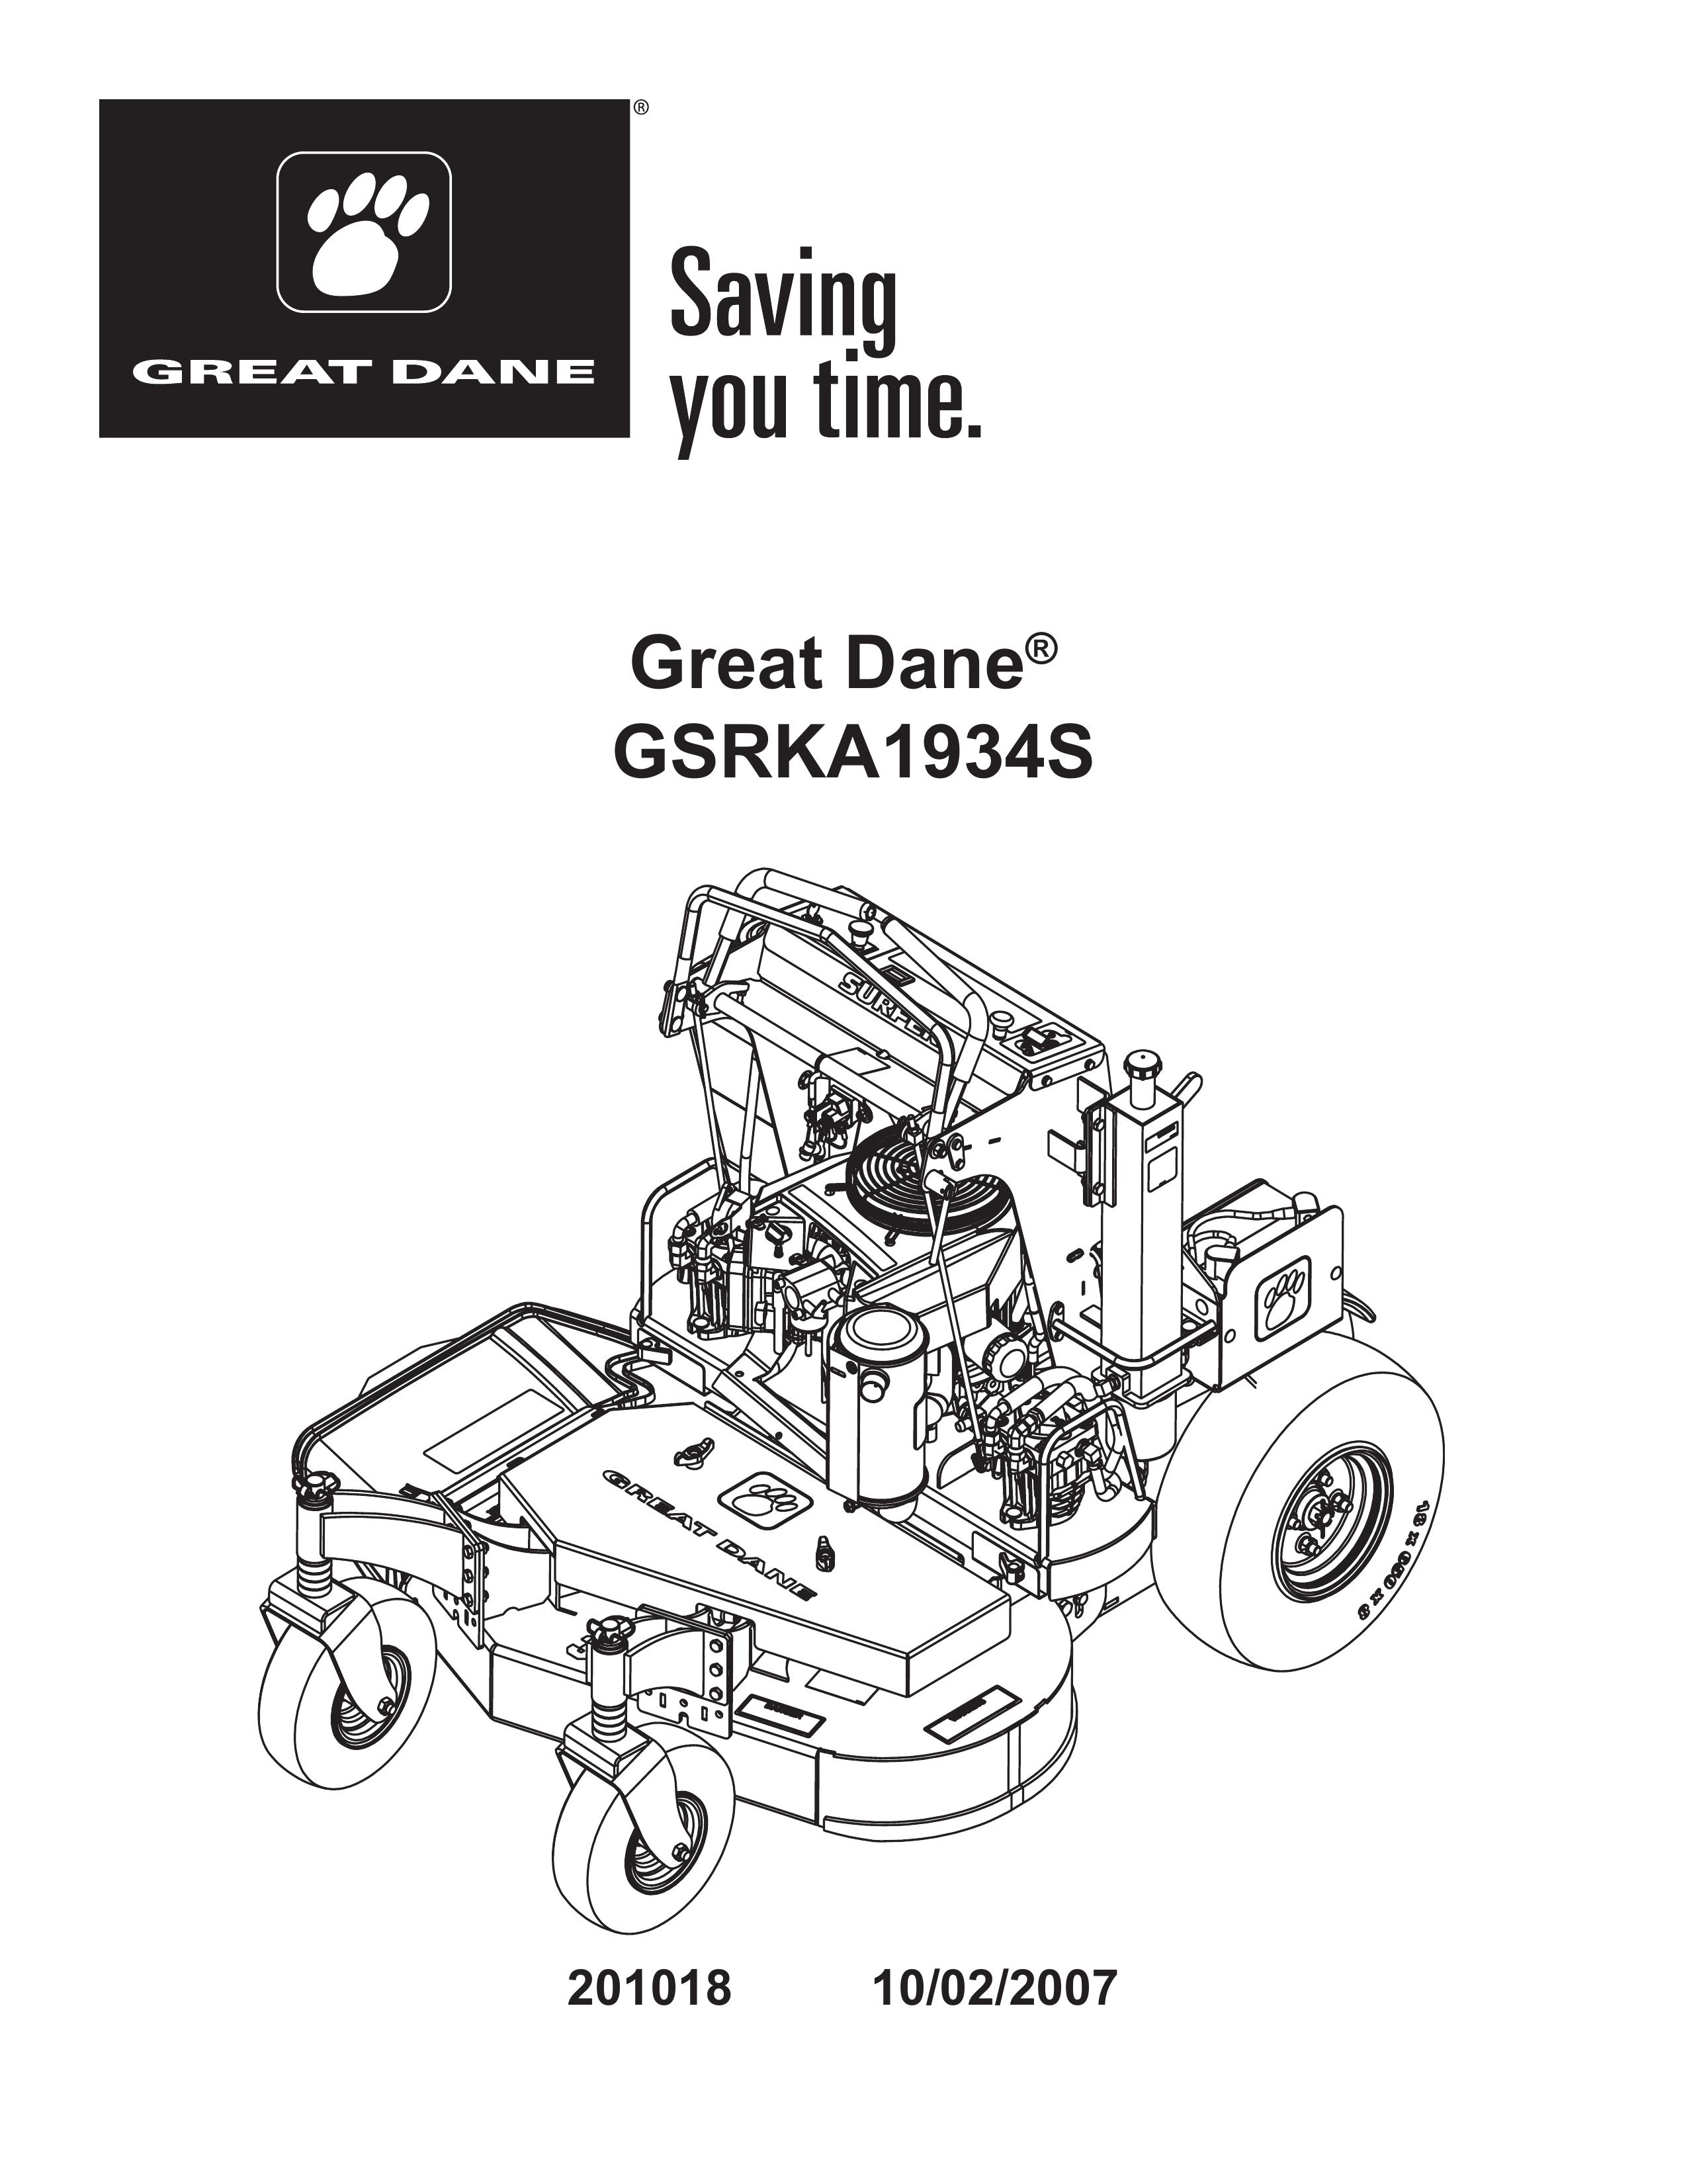 Great Dane GSRKA1934S Lawn Mower User Manual